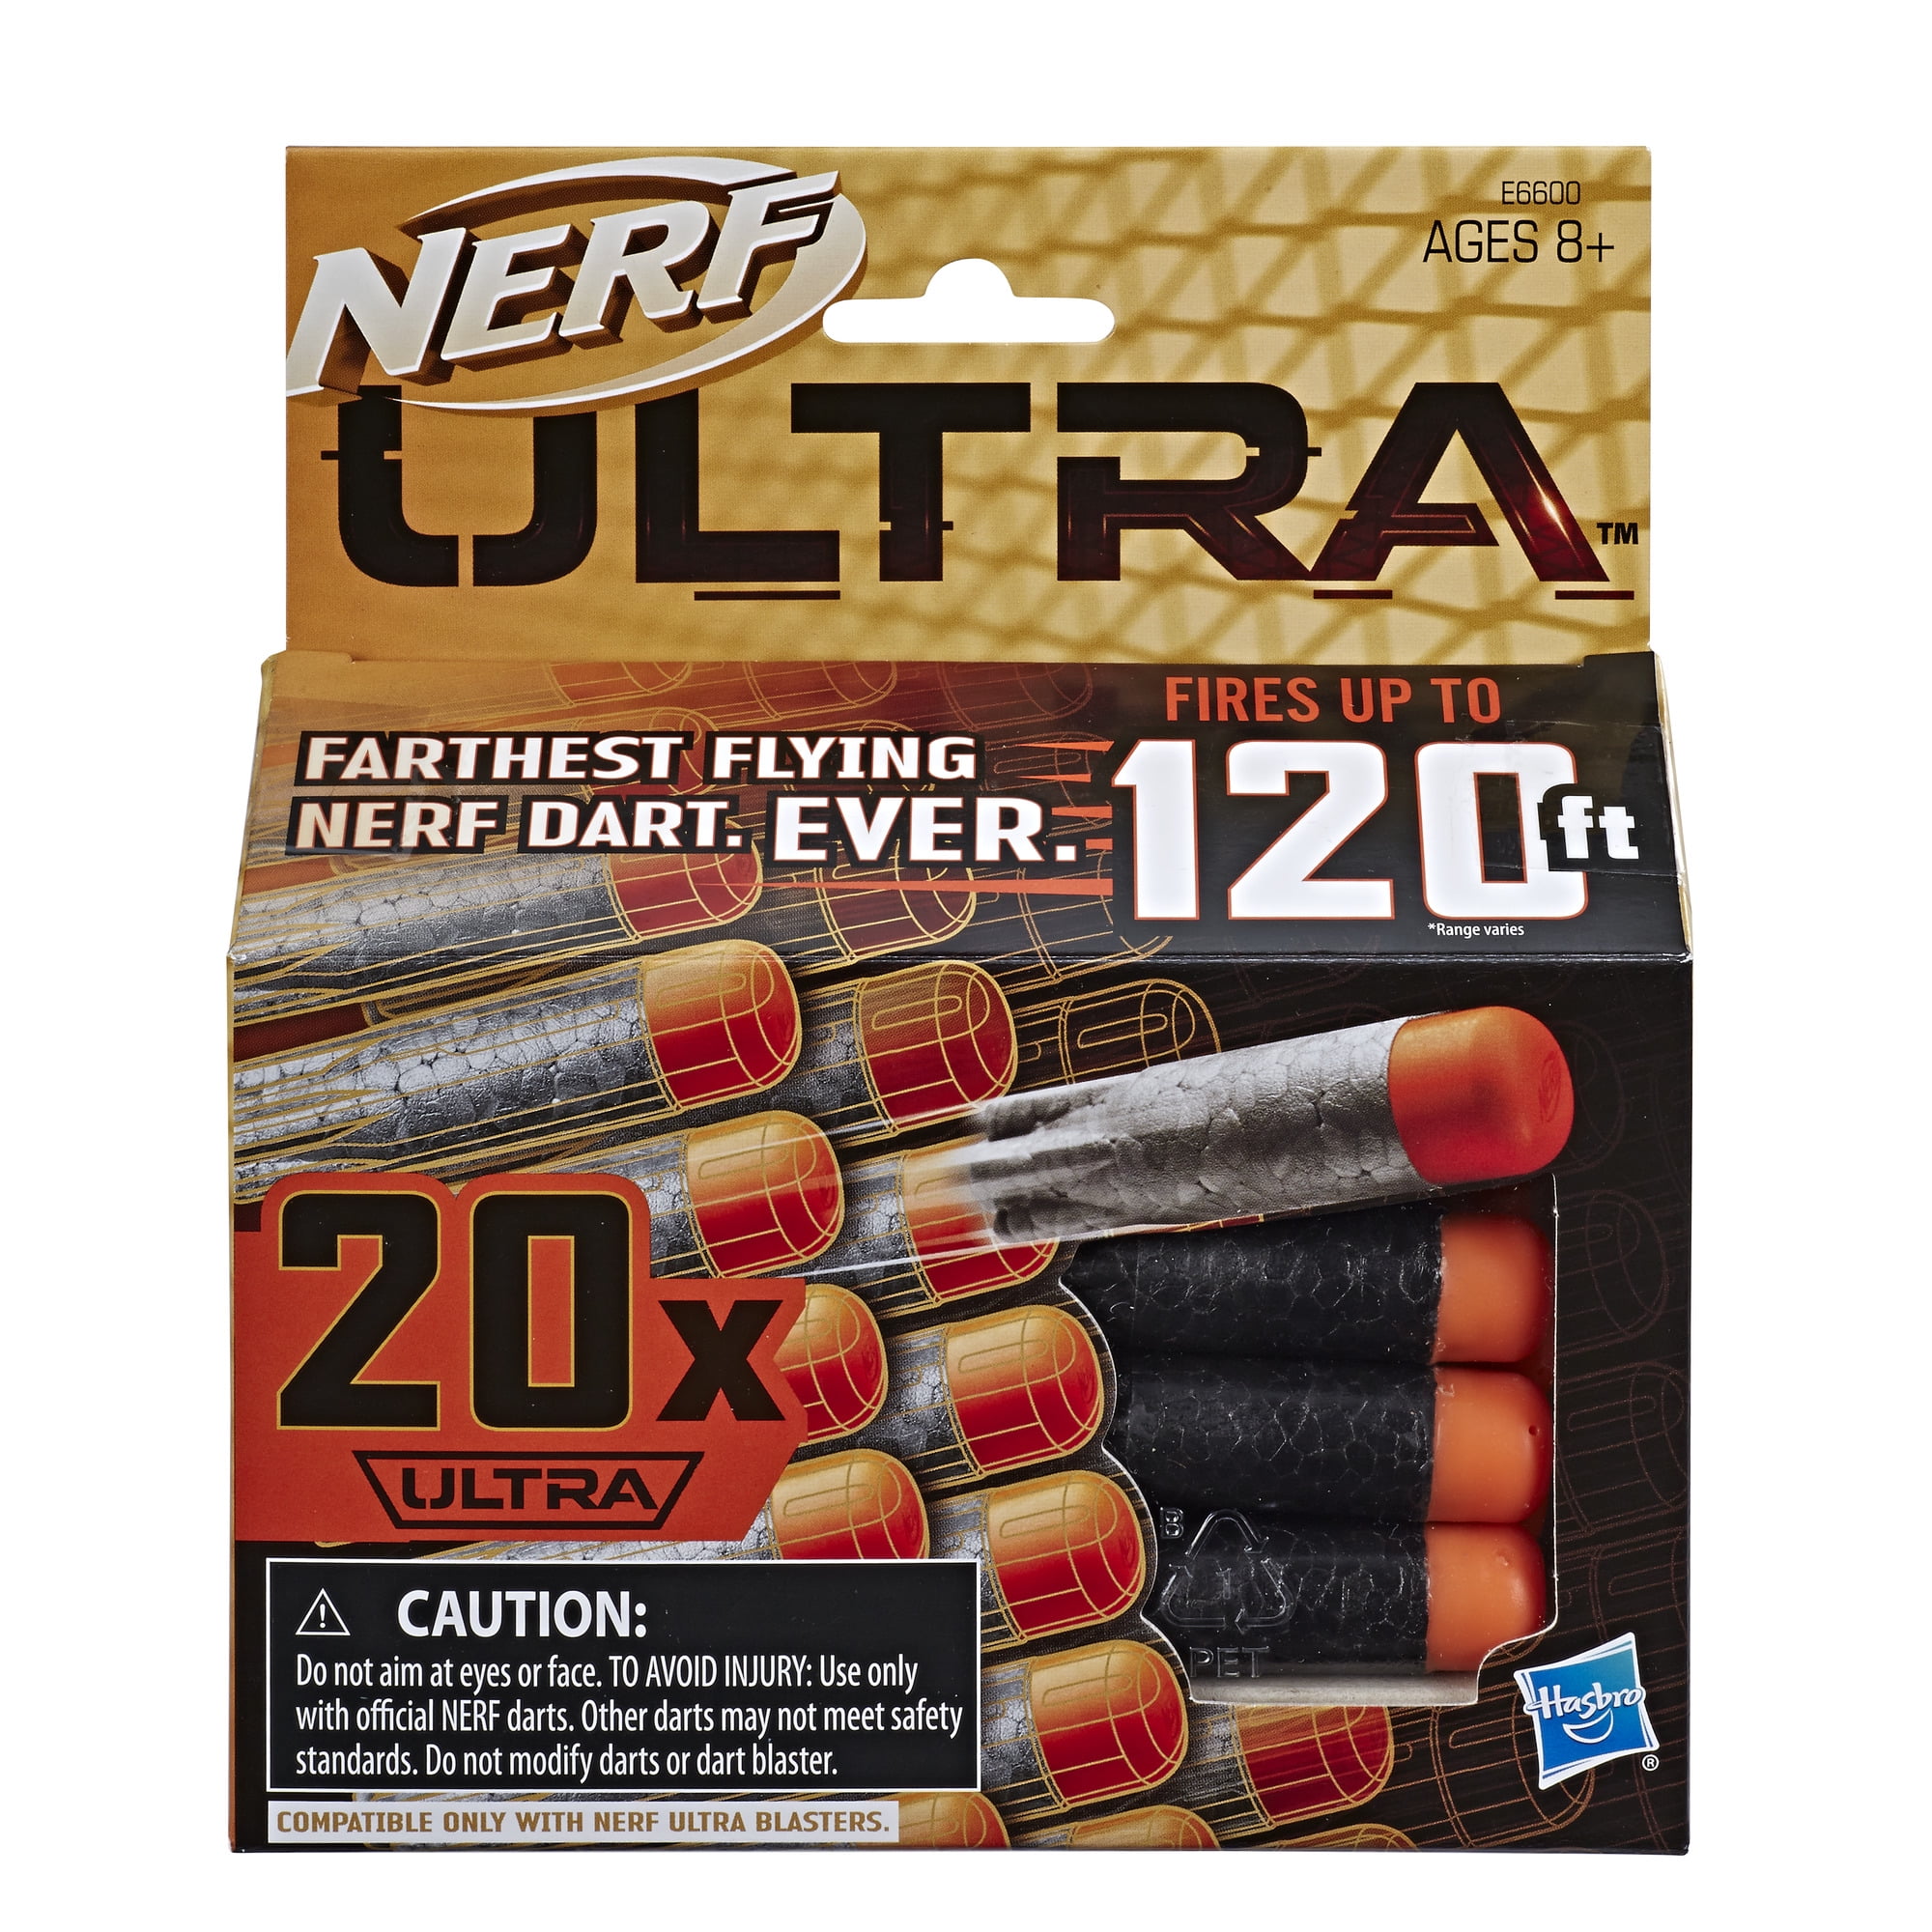 NERF ULTRA 20 High Performance Refill Foam Darts Bullets Accurate E6600 